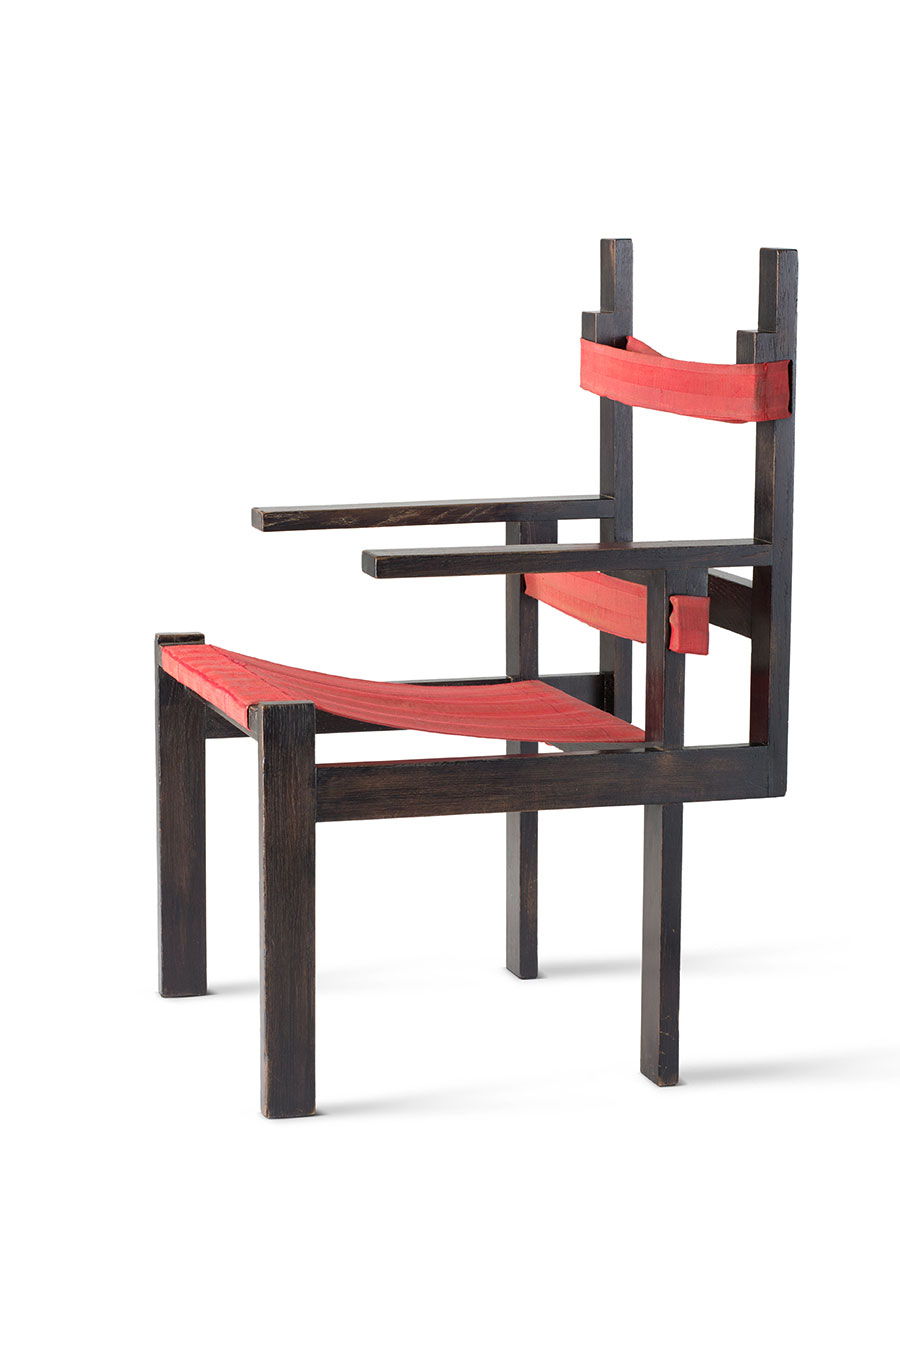 Marcel Breuer, lath chair, ti 1a, 1922, Collection Vitra Design Museum, photo: © Vitra Design Museum, Jürgen Hans.